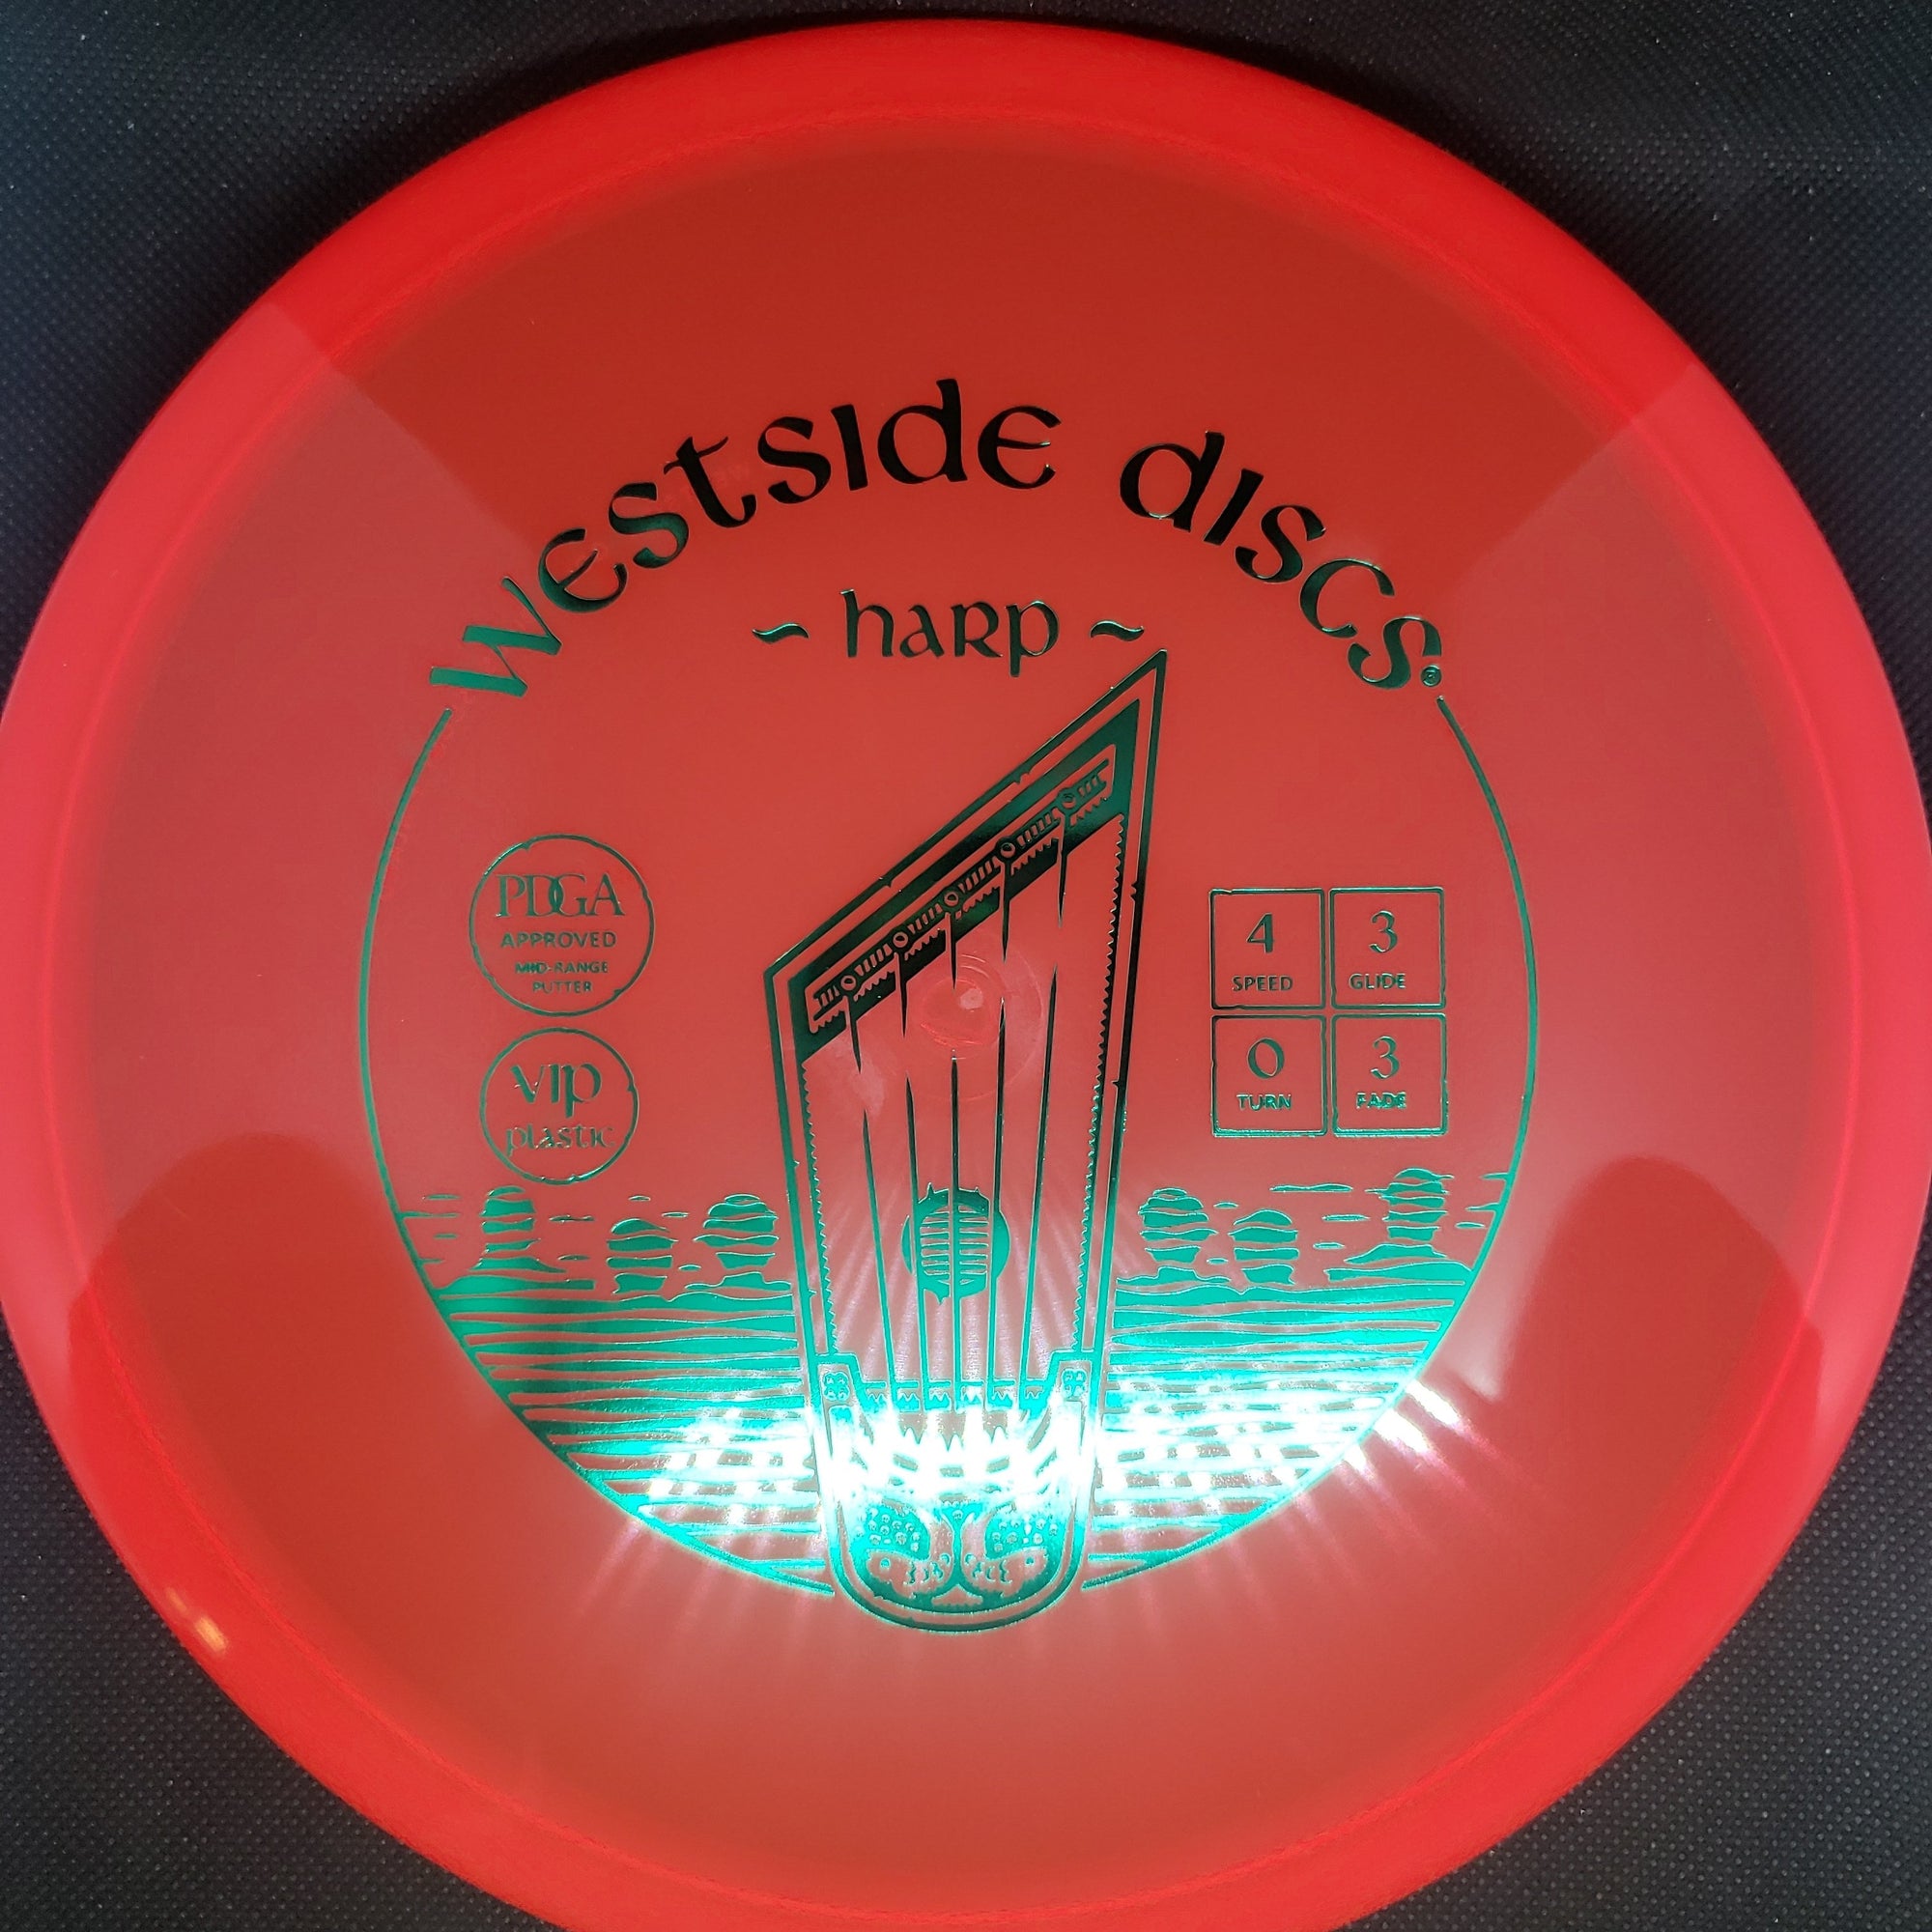 Westside Discs Mid Range Harp, VIP